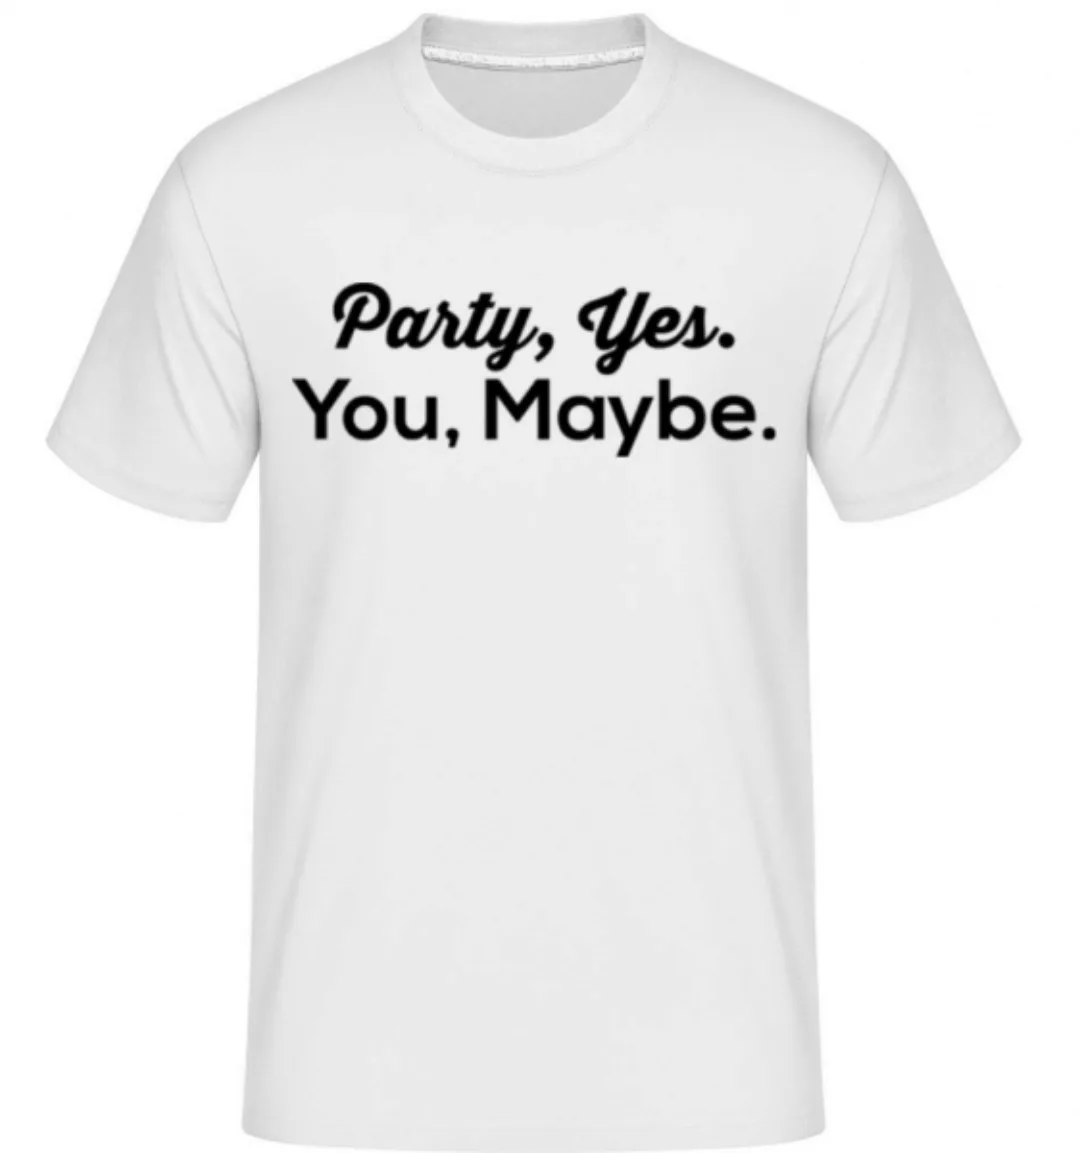 Party Yes You Maybe · Shirtinator Männer T-Shirt günstig online kaufen